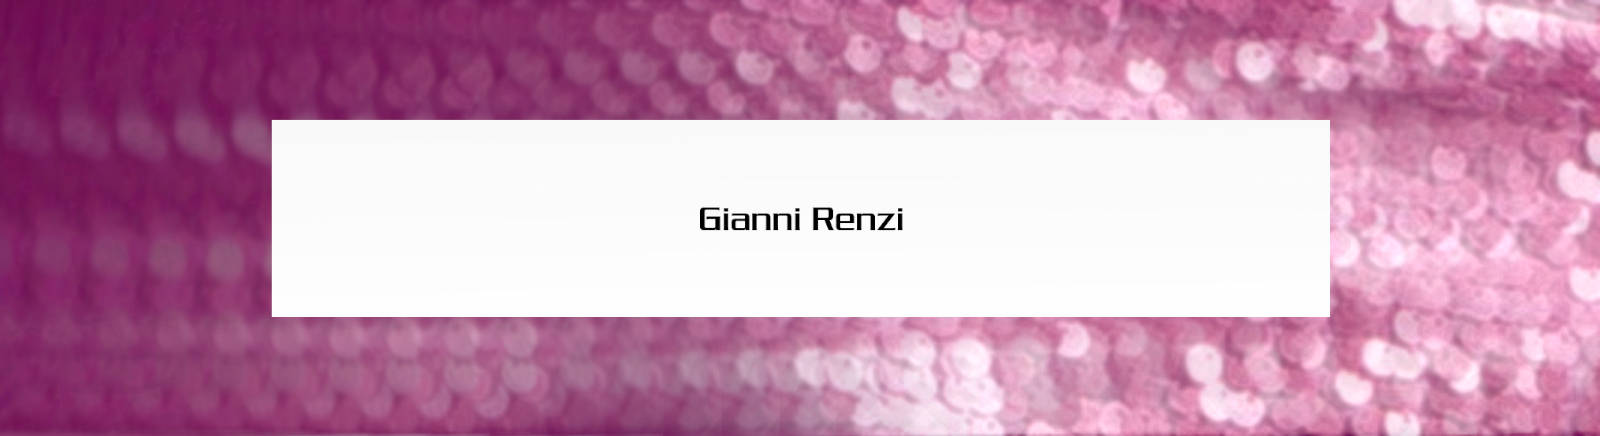 Prange: Gianni Renzi Winterschuhe für Damen online shoppen